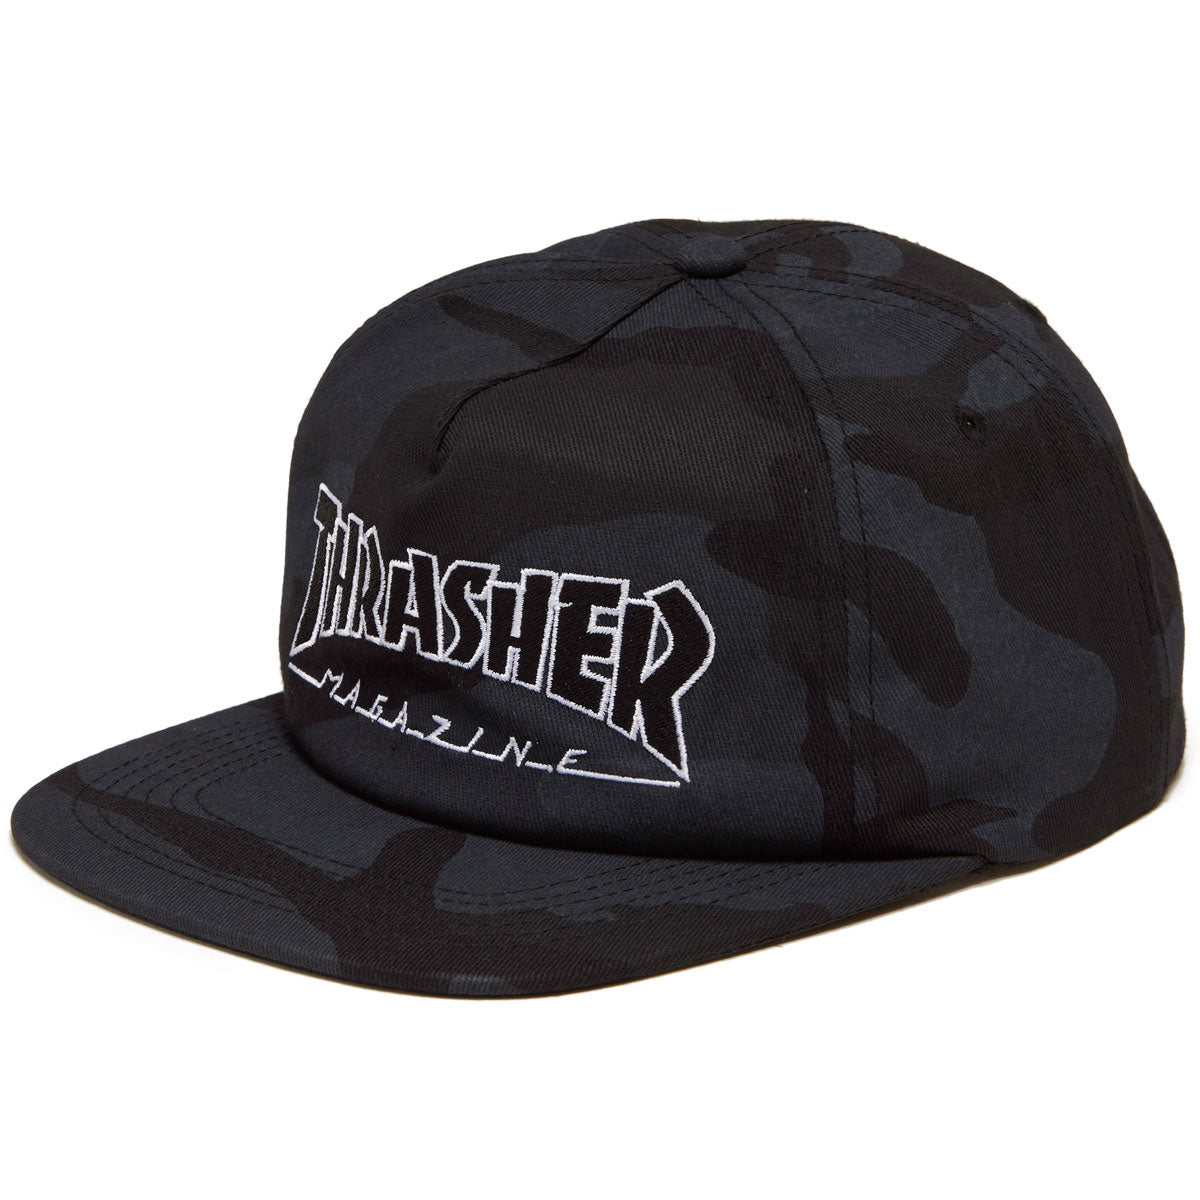 Thrasher Outlined Snapback Hat - Black Camo image 1